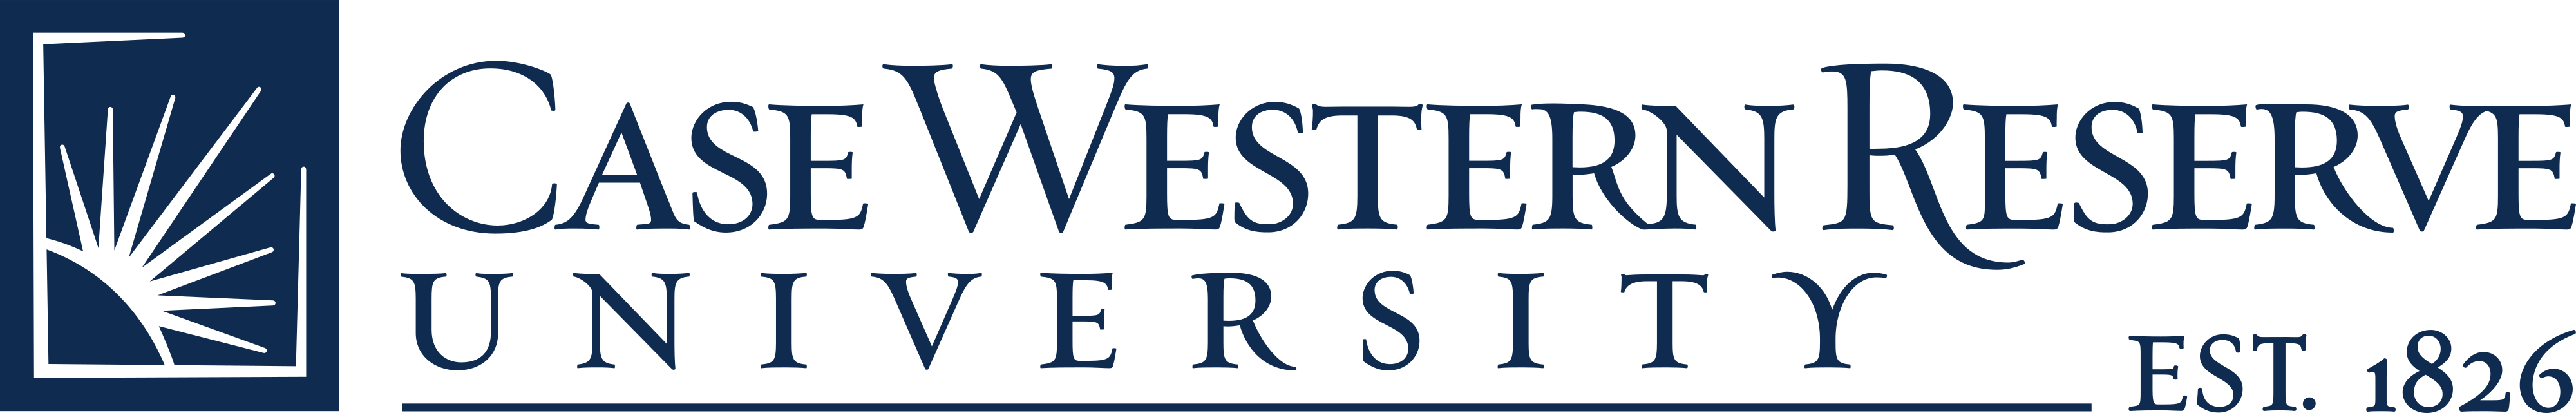 Case Western Reserve University logo download.